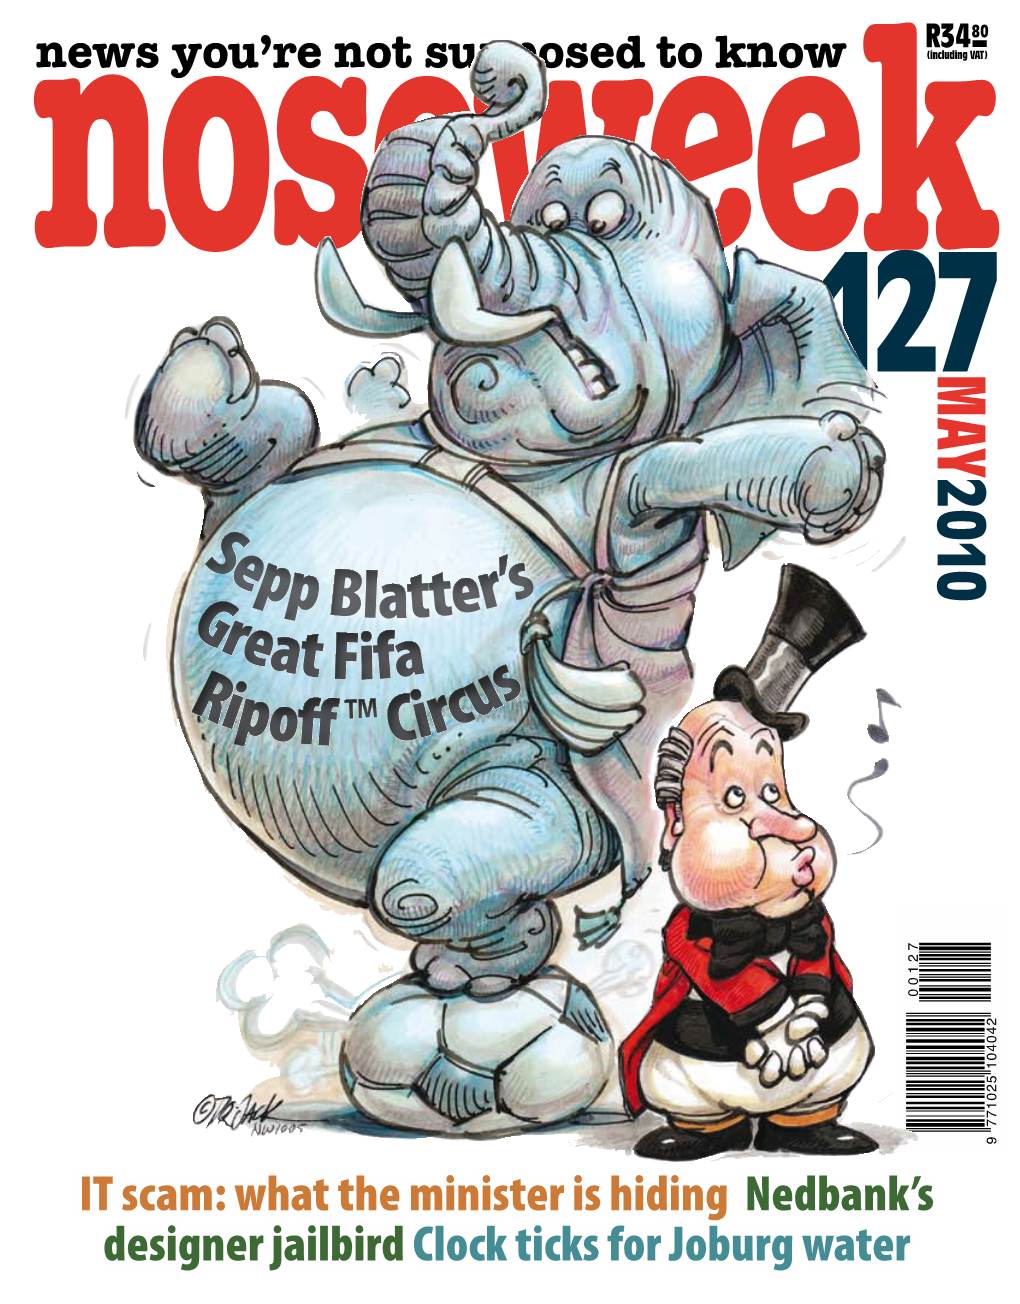 Sepp Blatter's Great Fifa Ripof ™ Circus